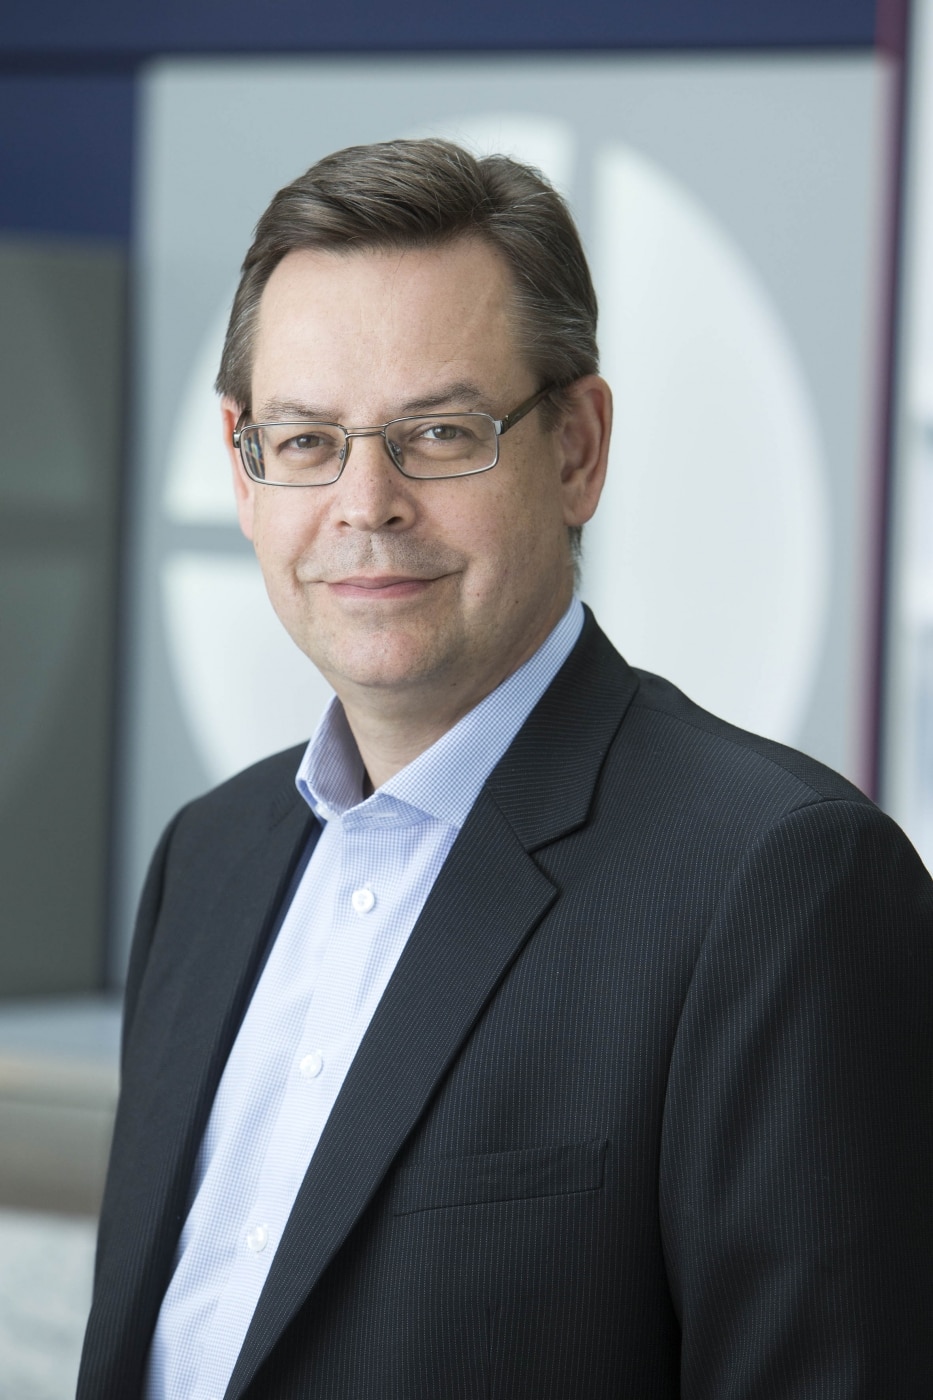 Electrolux appoints JP Iversen as CIO – Electrolux Group